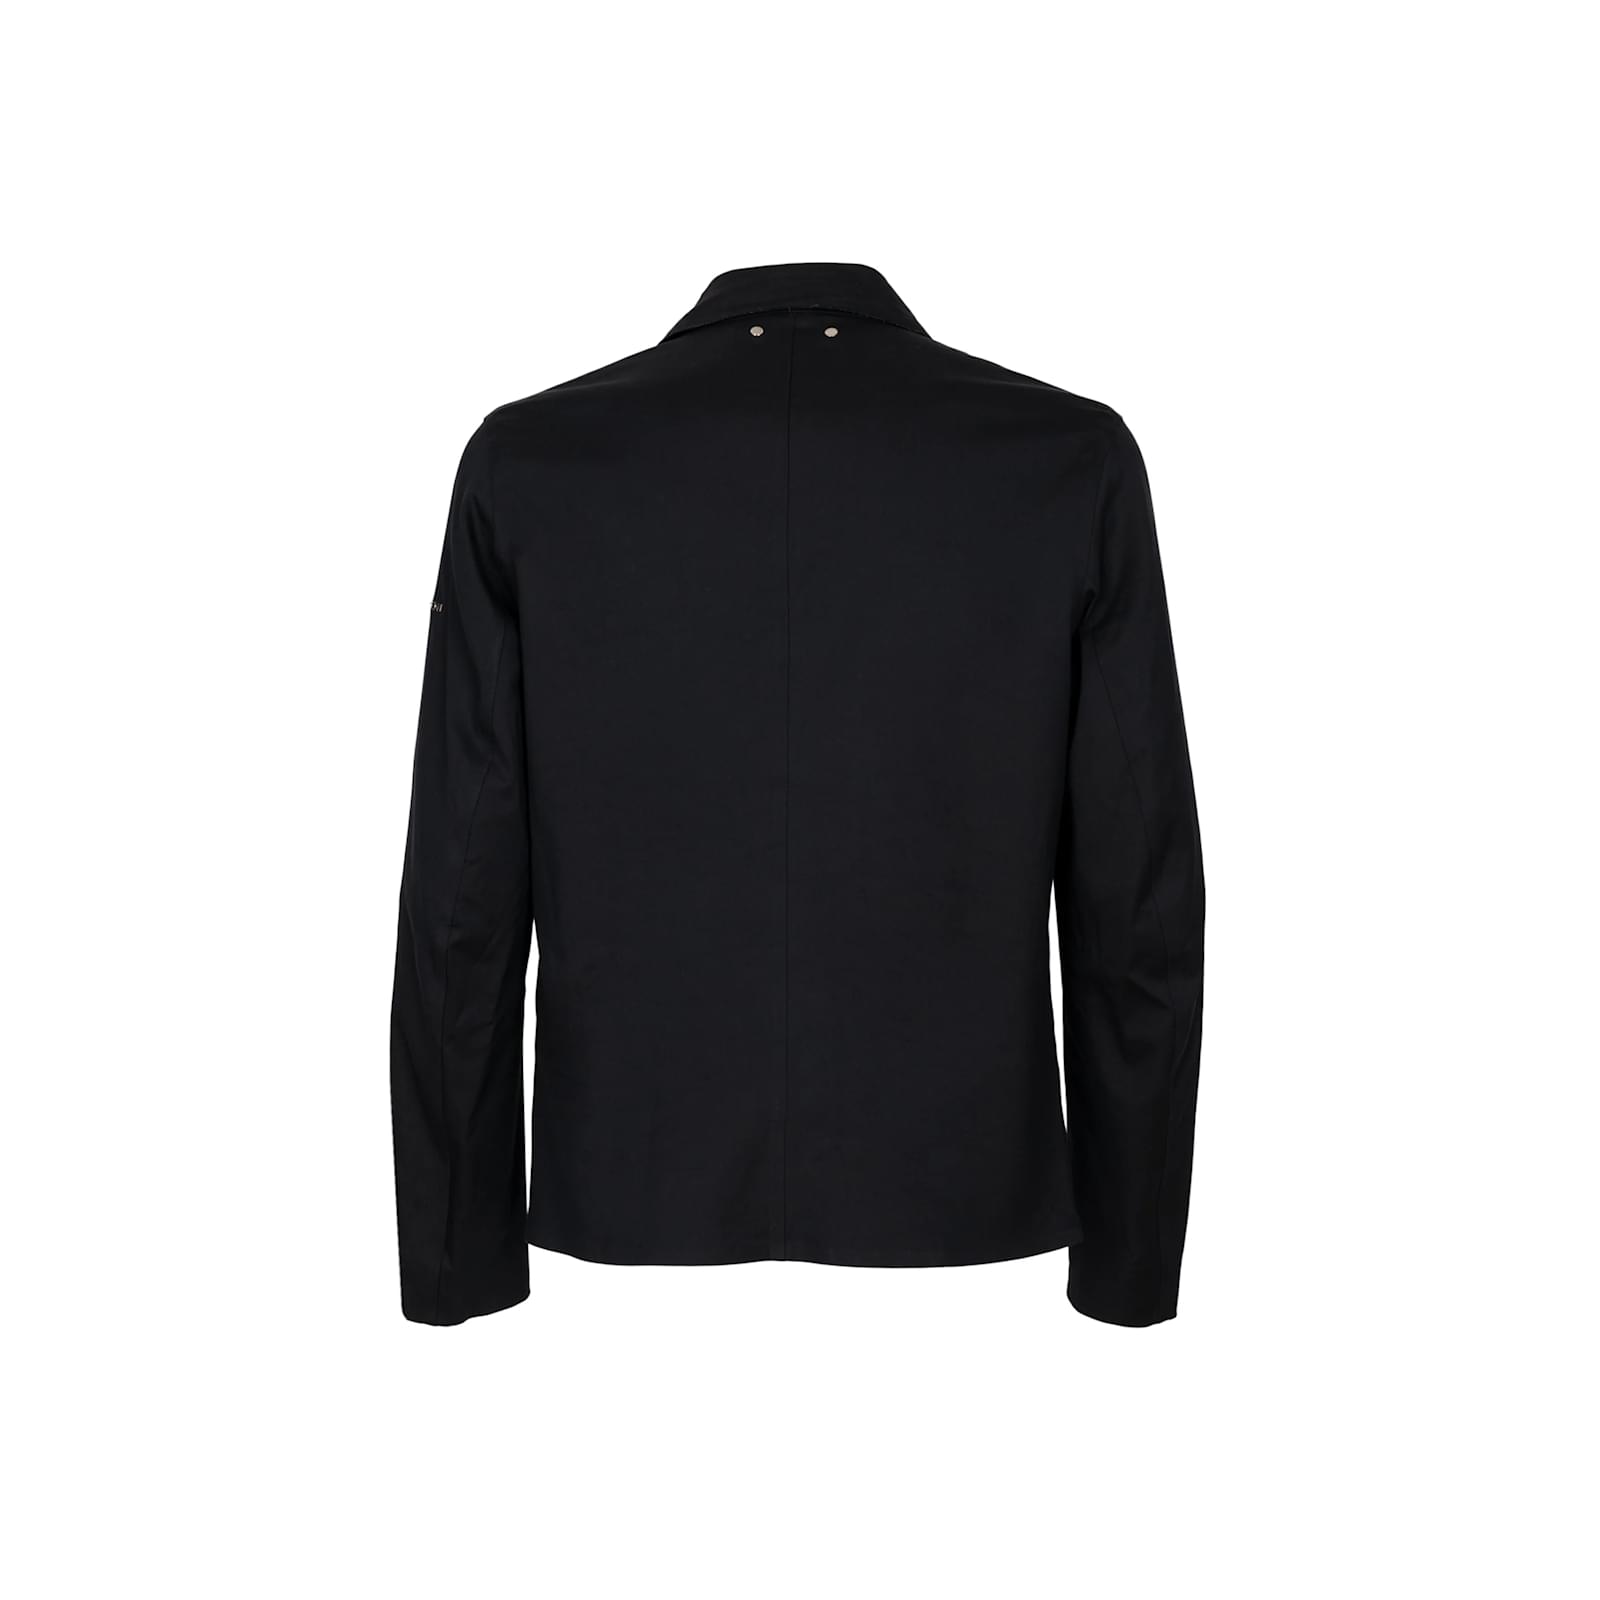 Louis Vuitton Cotton Harrington Jacket Dark Grey. Size 54